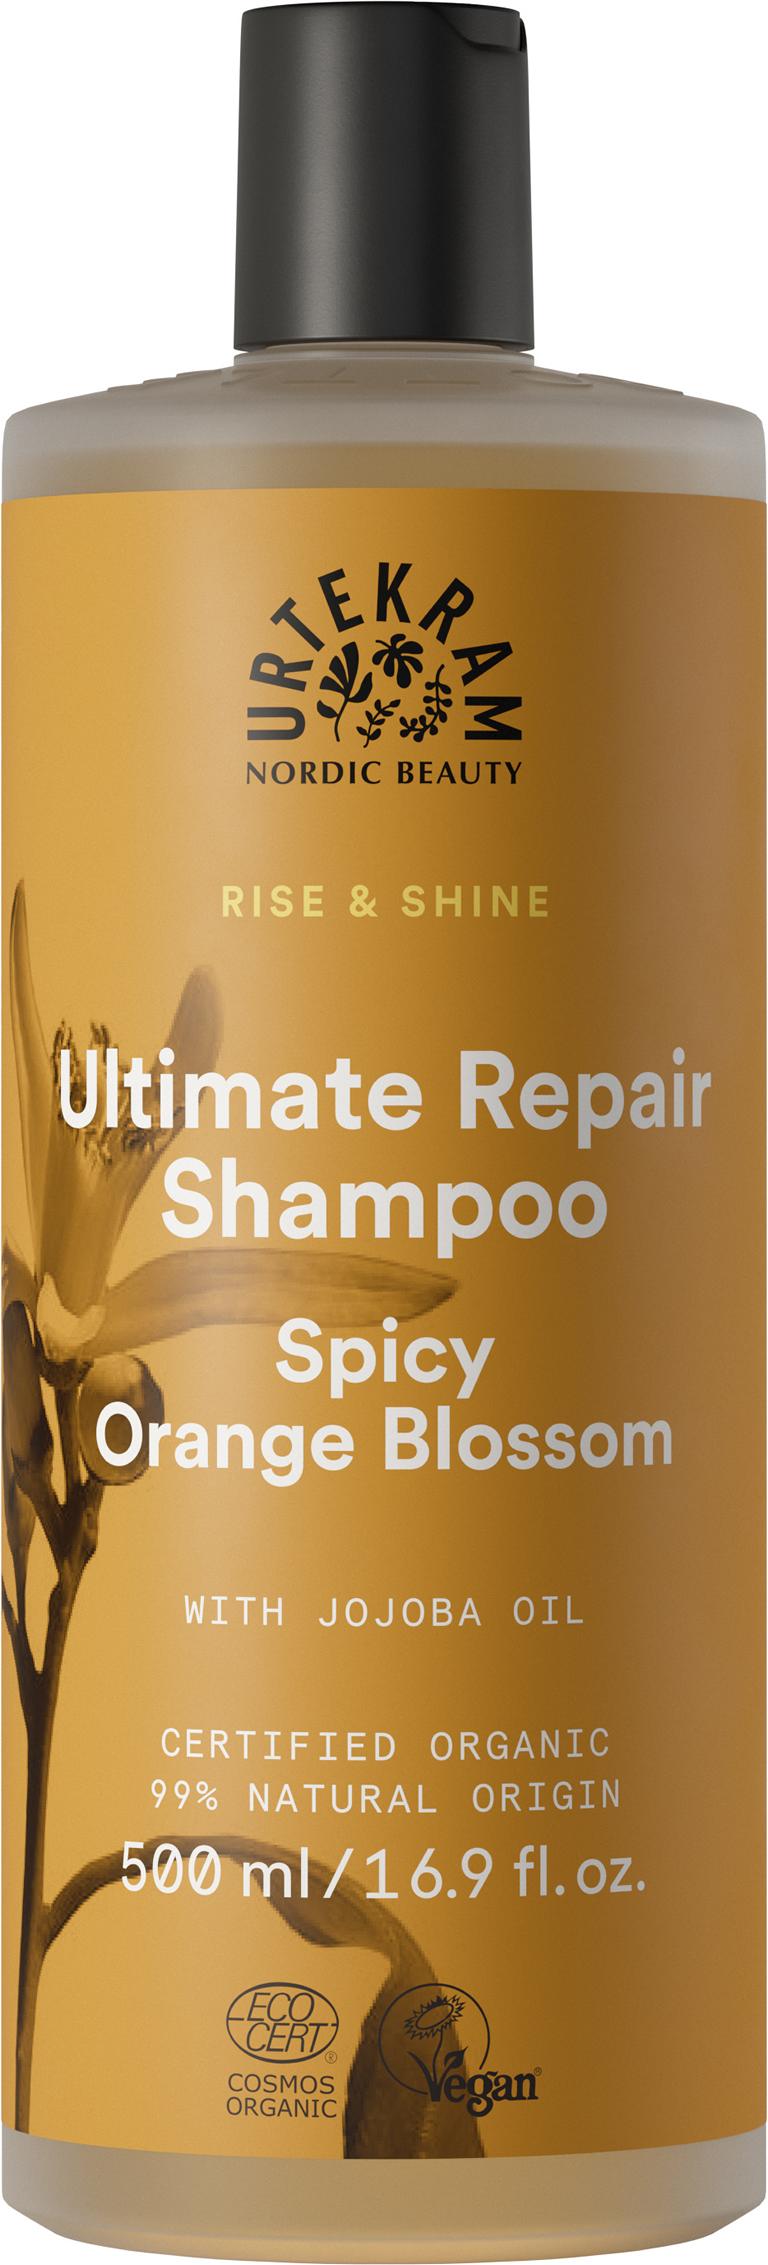 Urtekram Spicy Orange Blossom Shampoo 500 ml 500 ml